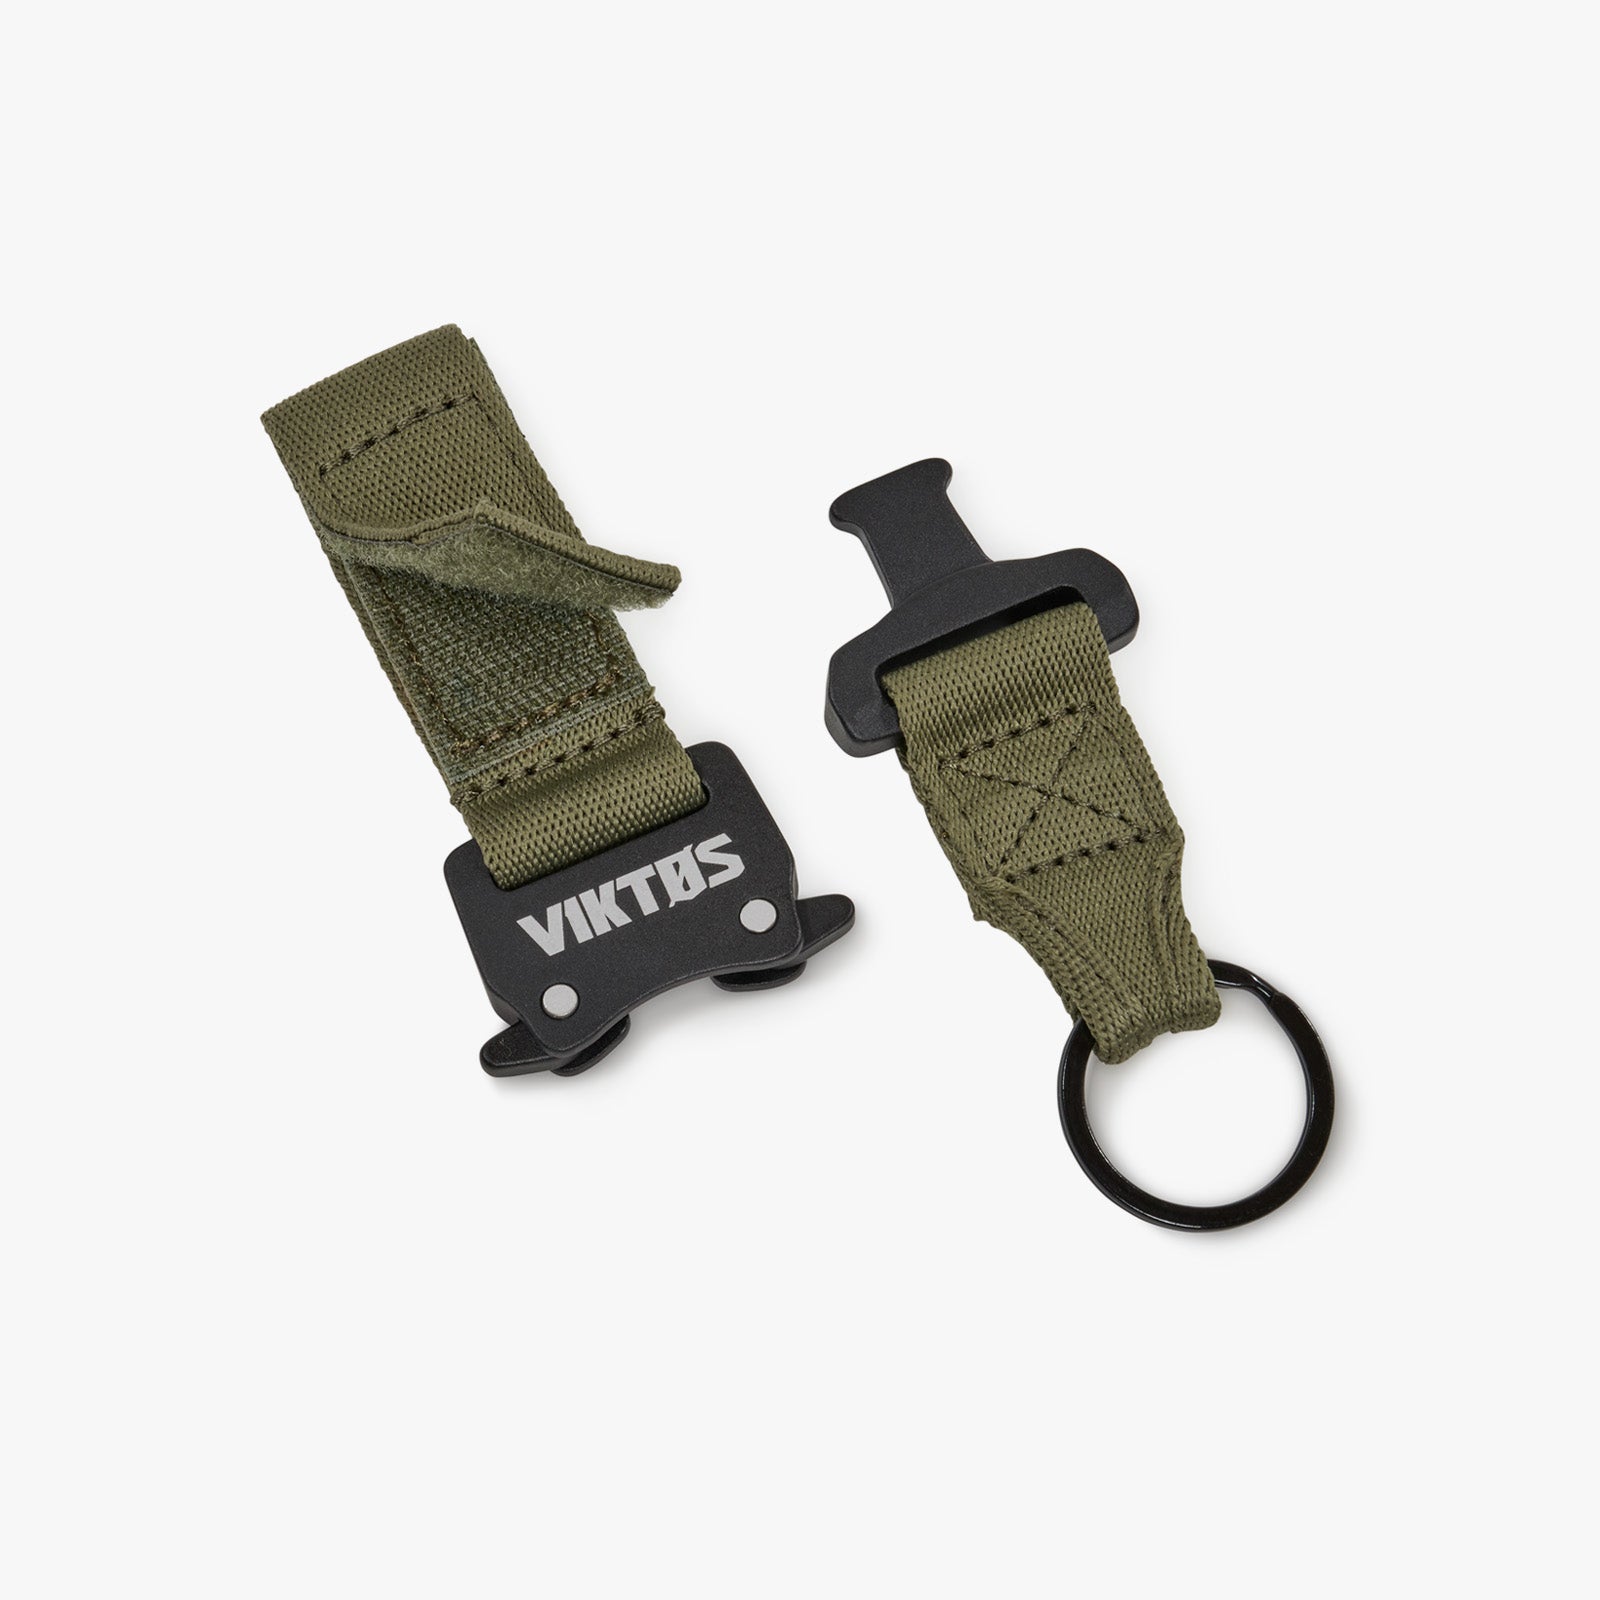 VIKTOS Bulldog Keychain Accessories VIKTOS Tactical Gear Supplier Tactical Distributors Australia